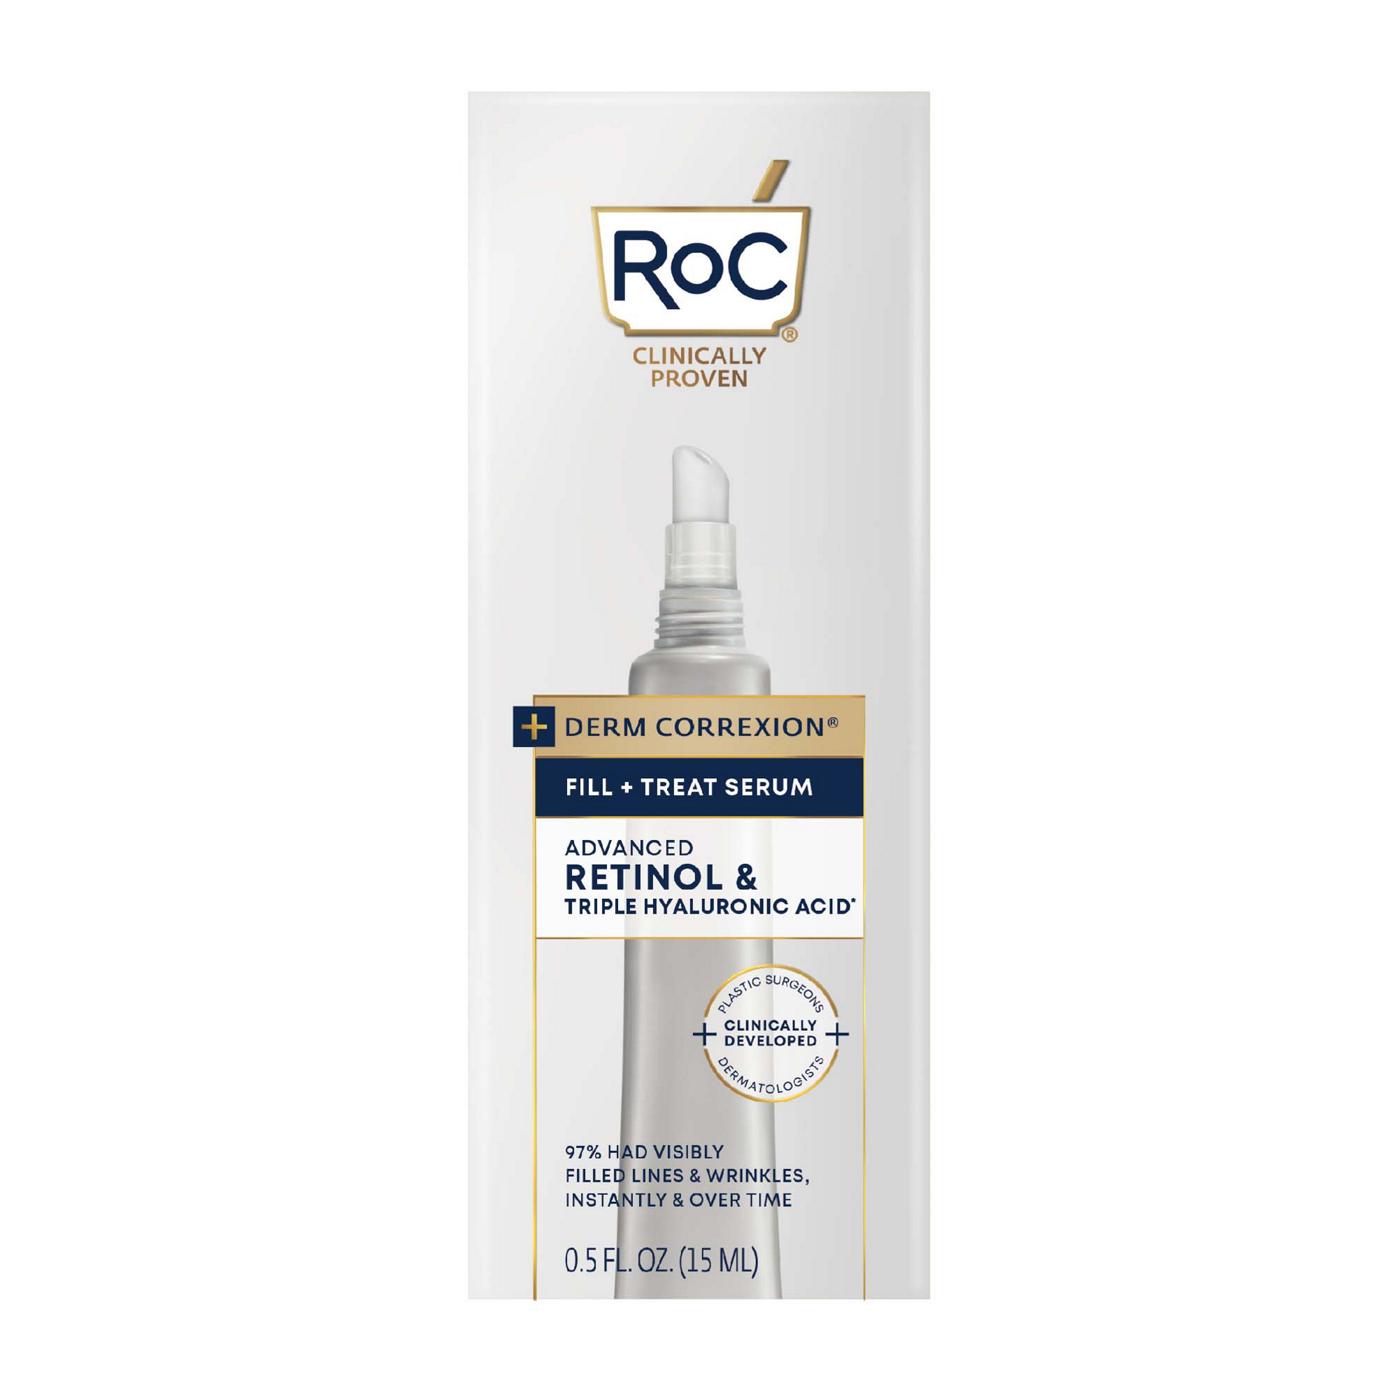 RoC Derm Correxion Advanced Retinol + Triple Hyaluronic Acid Serum; image 1 of 5